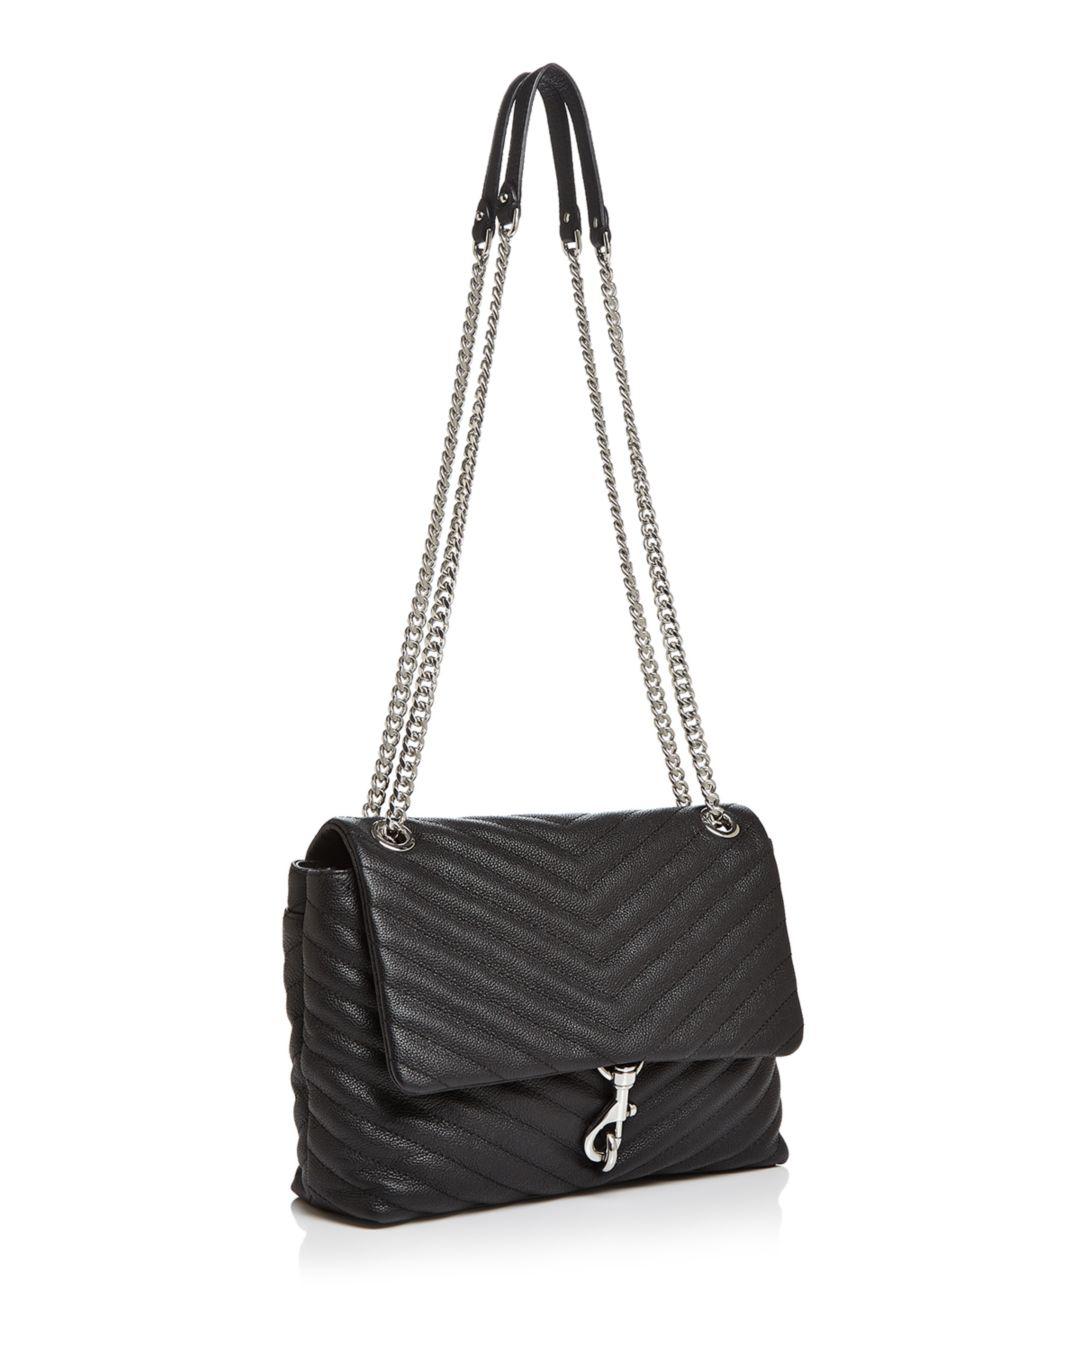 Rebecca Minkoff Edie Medium Convertible Leather Shoulder Bag in Black/Silver (Black) - Lyst